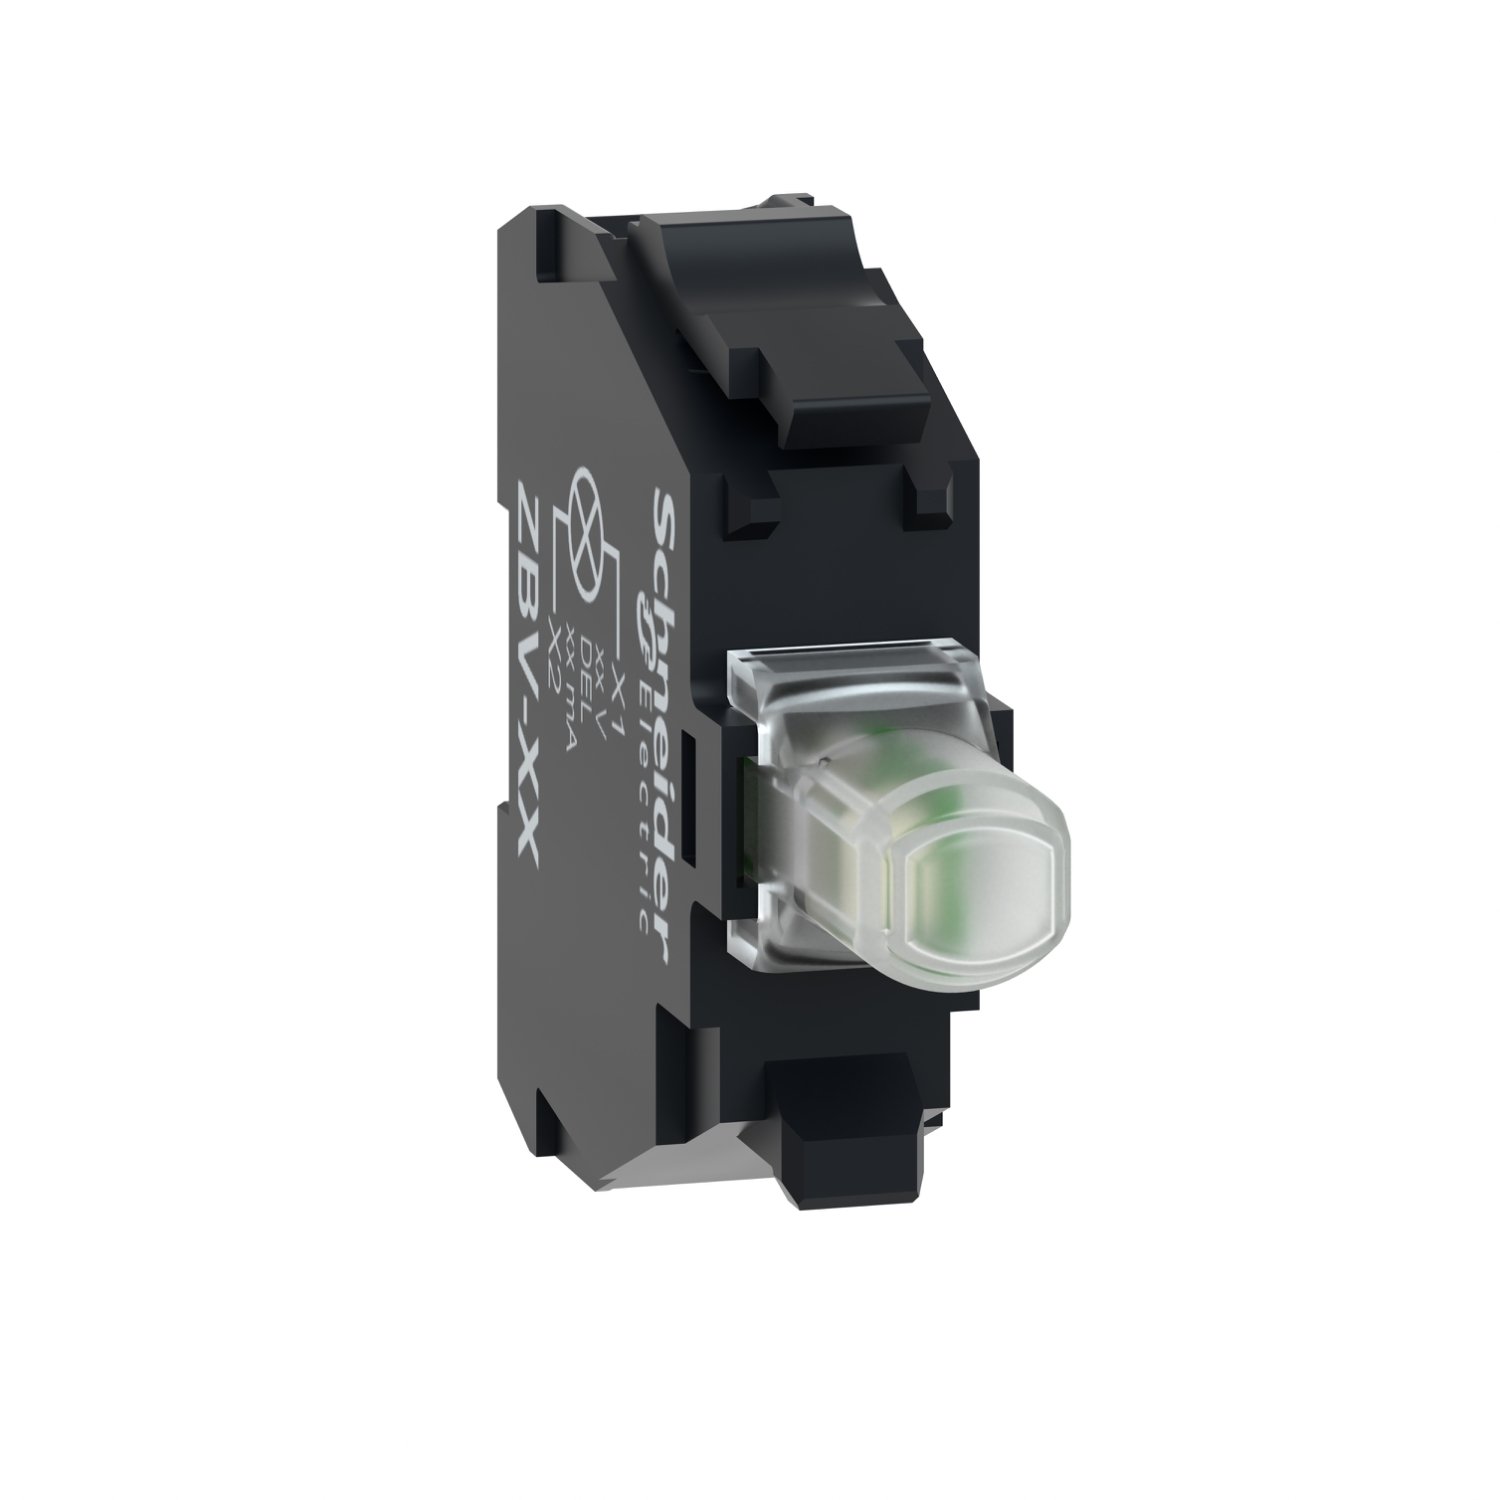 Light block, Harmony XB4, Harmony XB5, for head 22mm, universal LED, screw clamp terminals, 24…120V AC DC